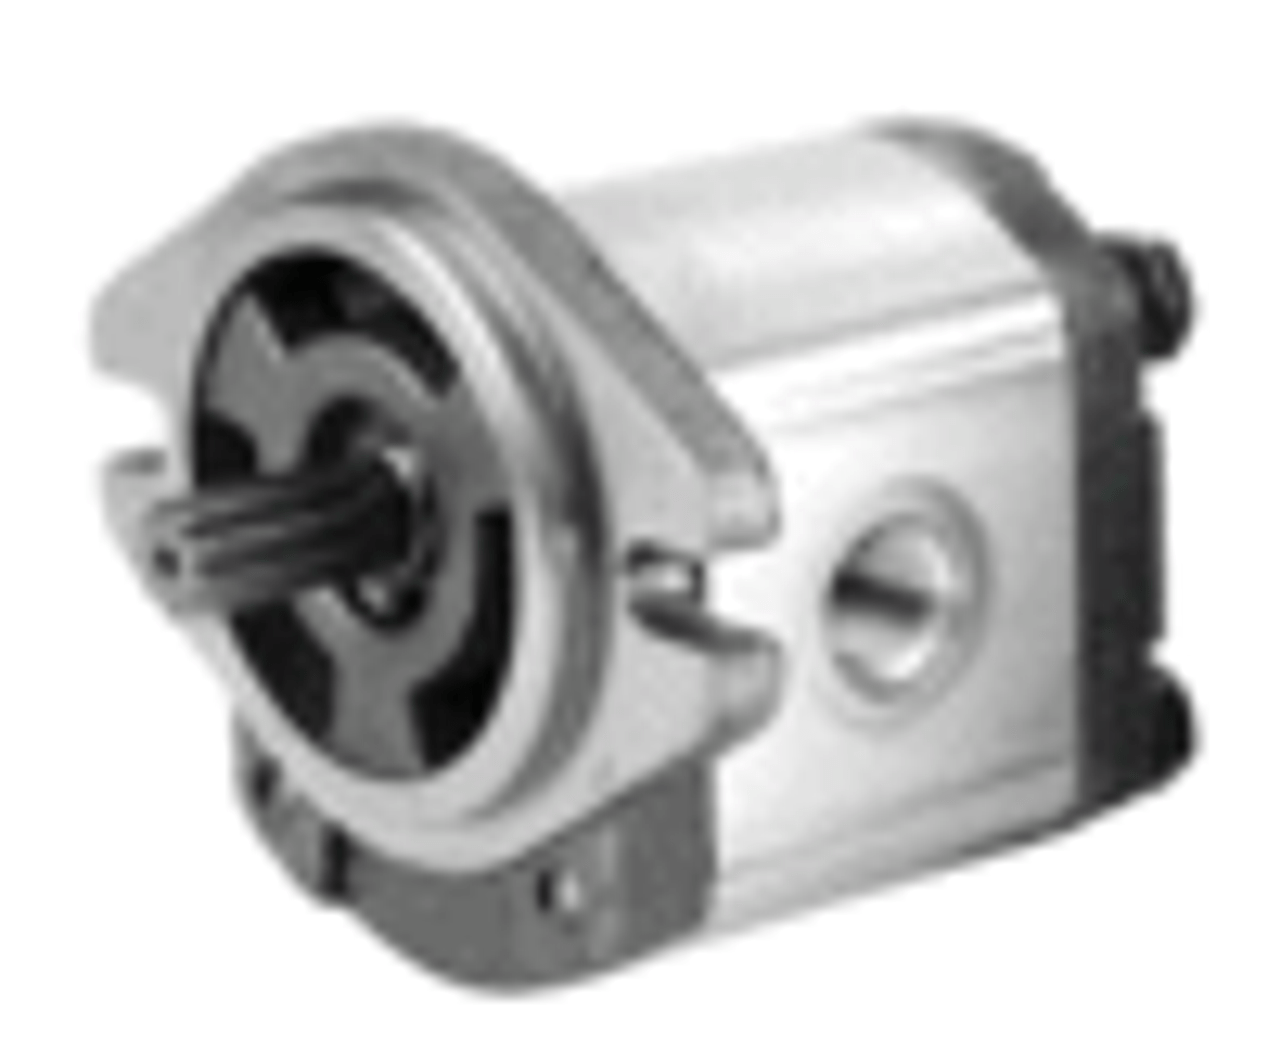 Honor Pumps 2MM2U08 Hydraulic gear motor .52 cubic inch displacement 9T splined shaft Bi-directional